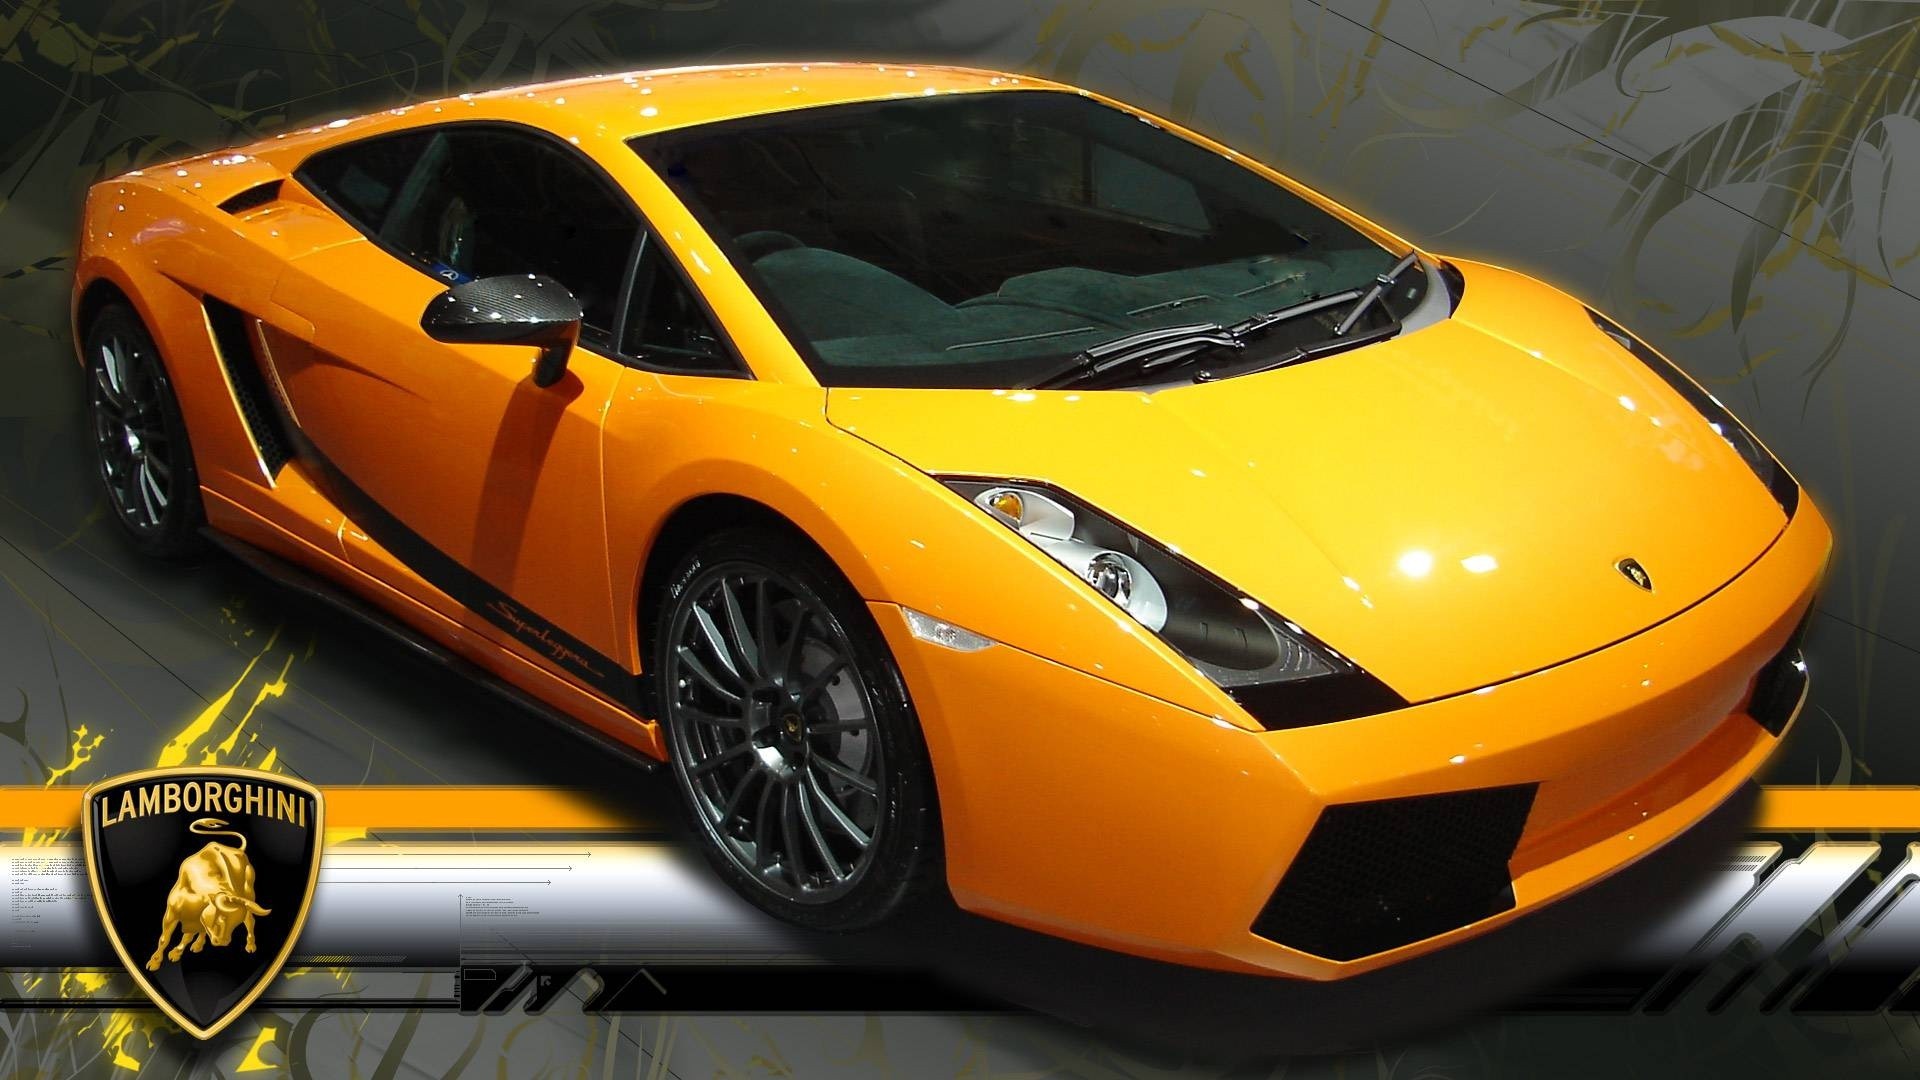 Market research: Automobili Lamborghini’s and luxury cars in China